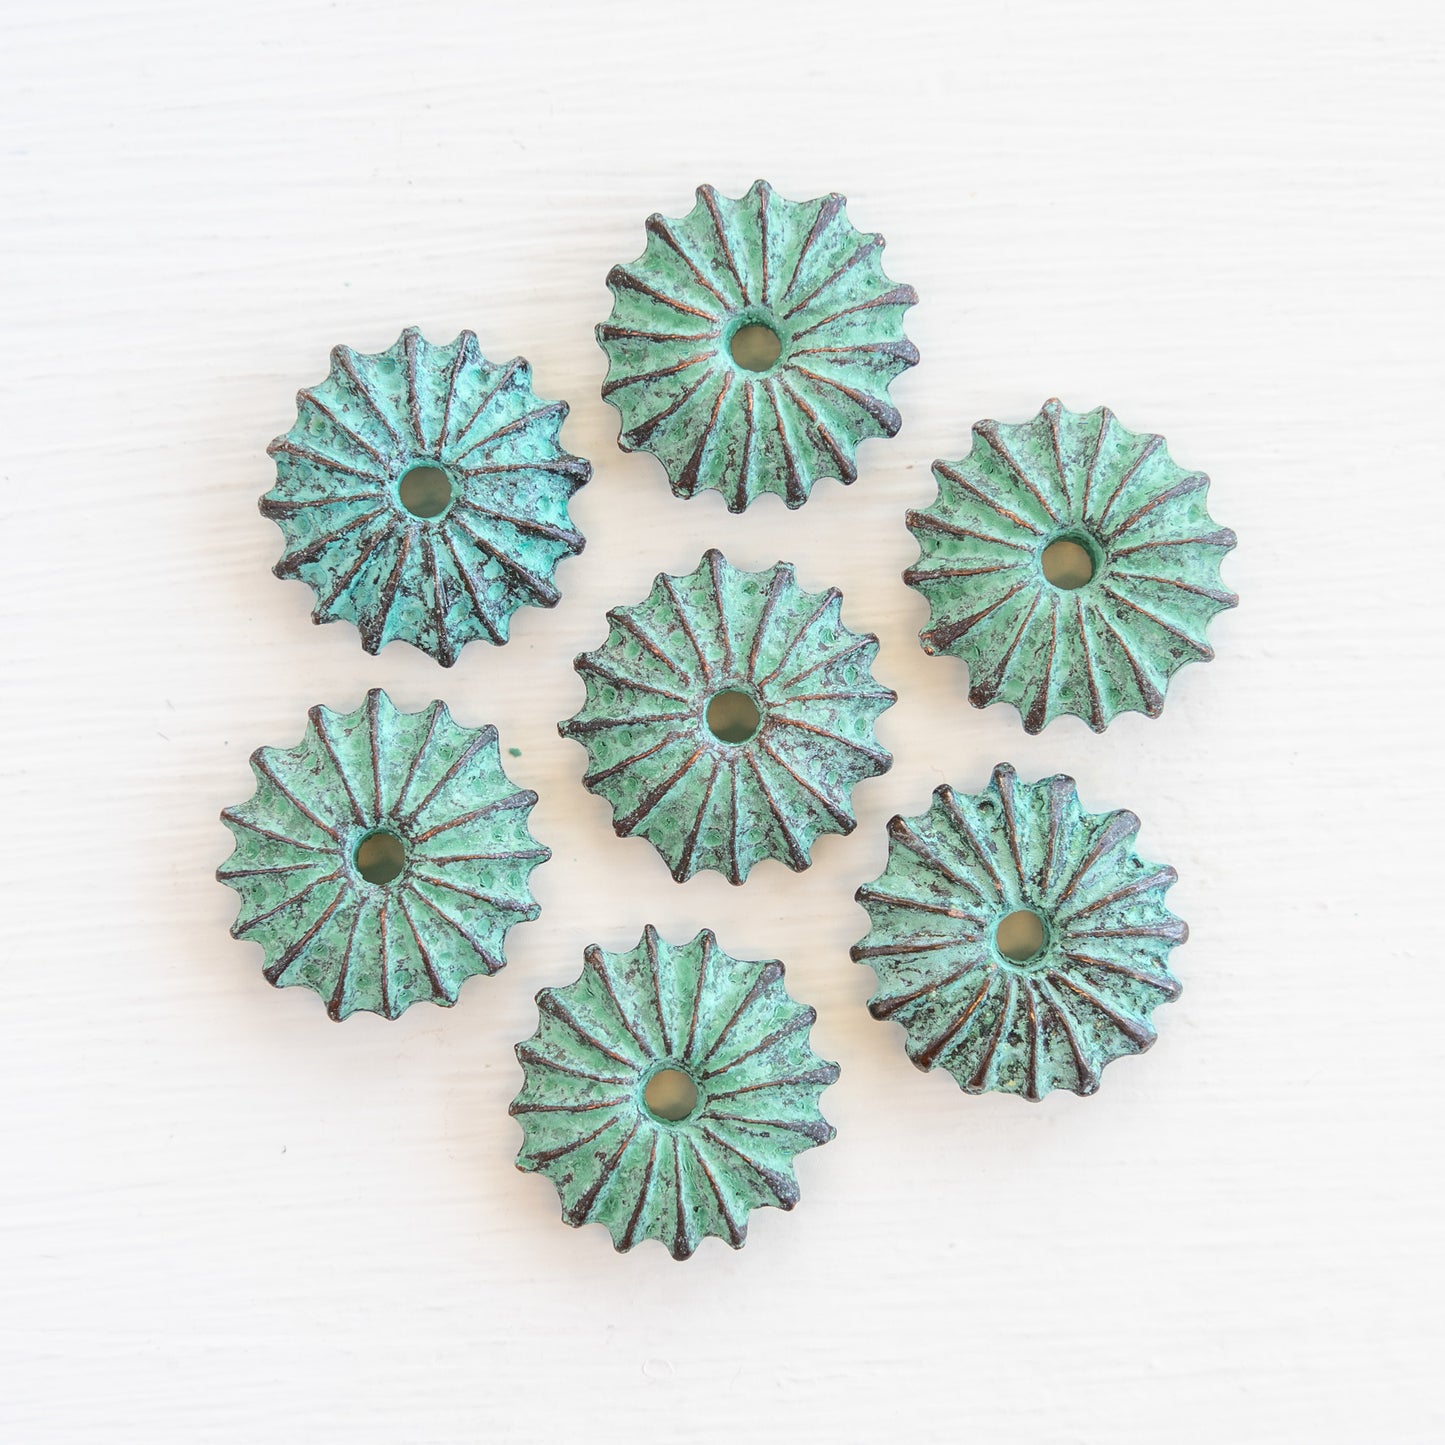 19mm Mykonos Metal Flat Sea Urchin Beads - Green Patina - Choose Amount